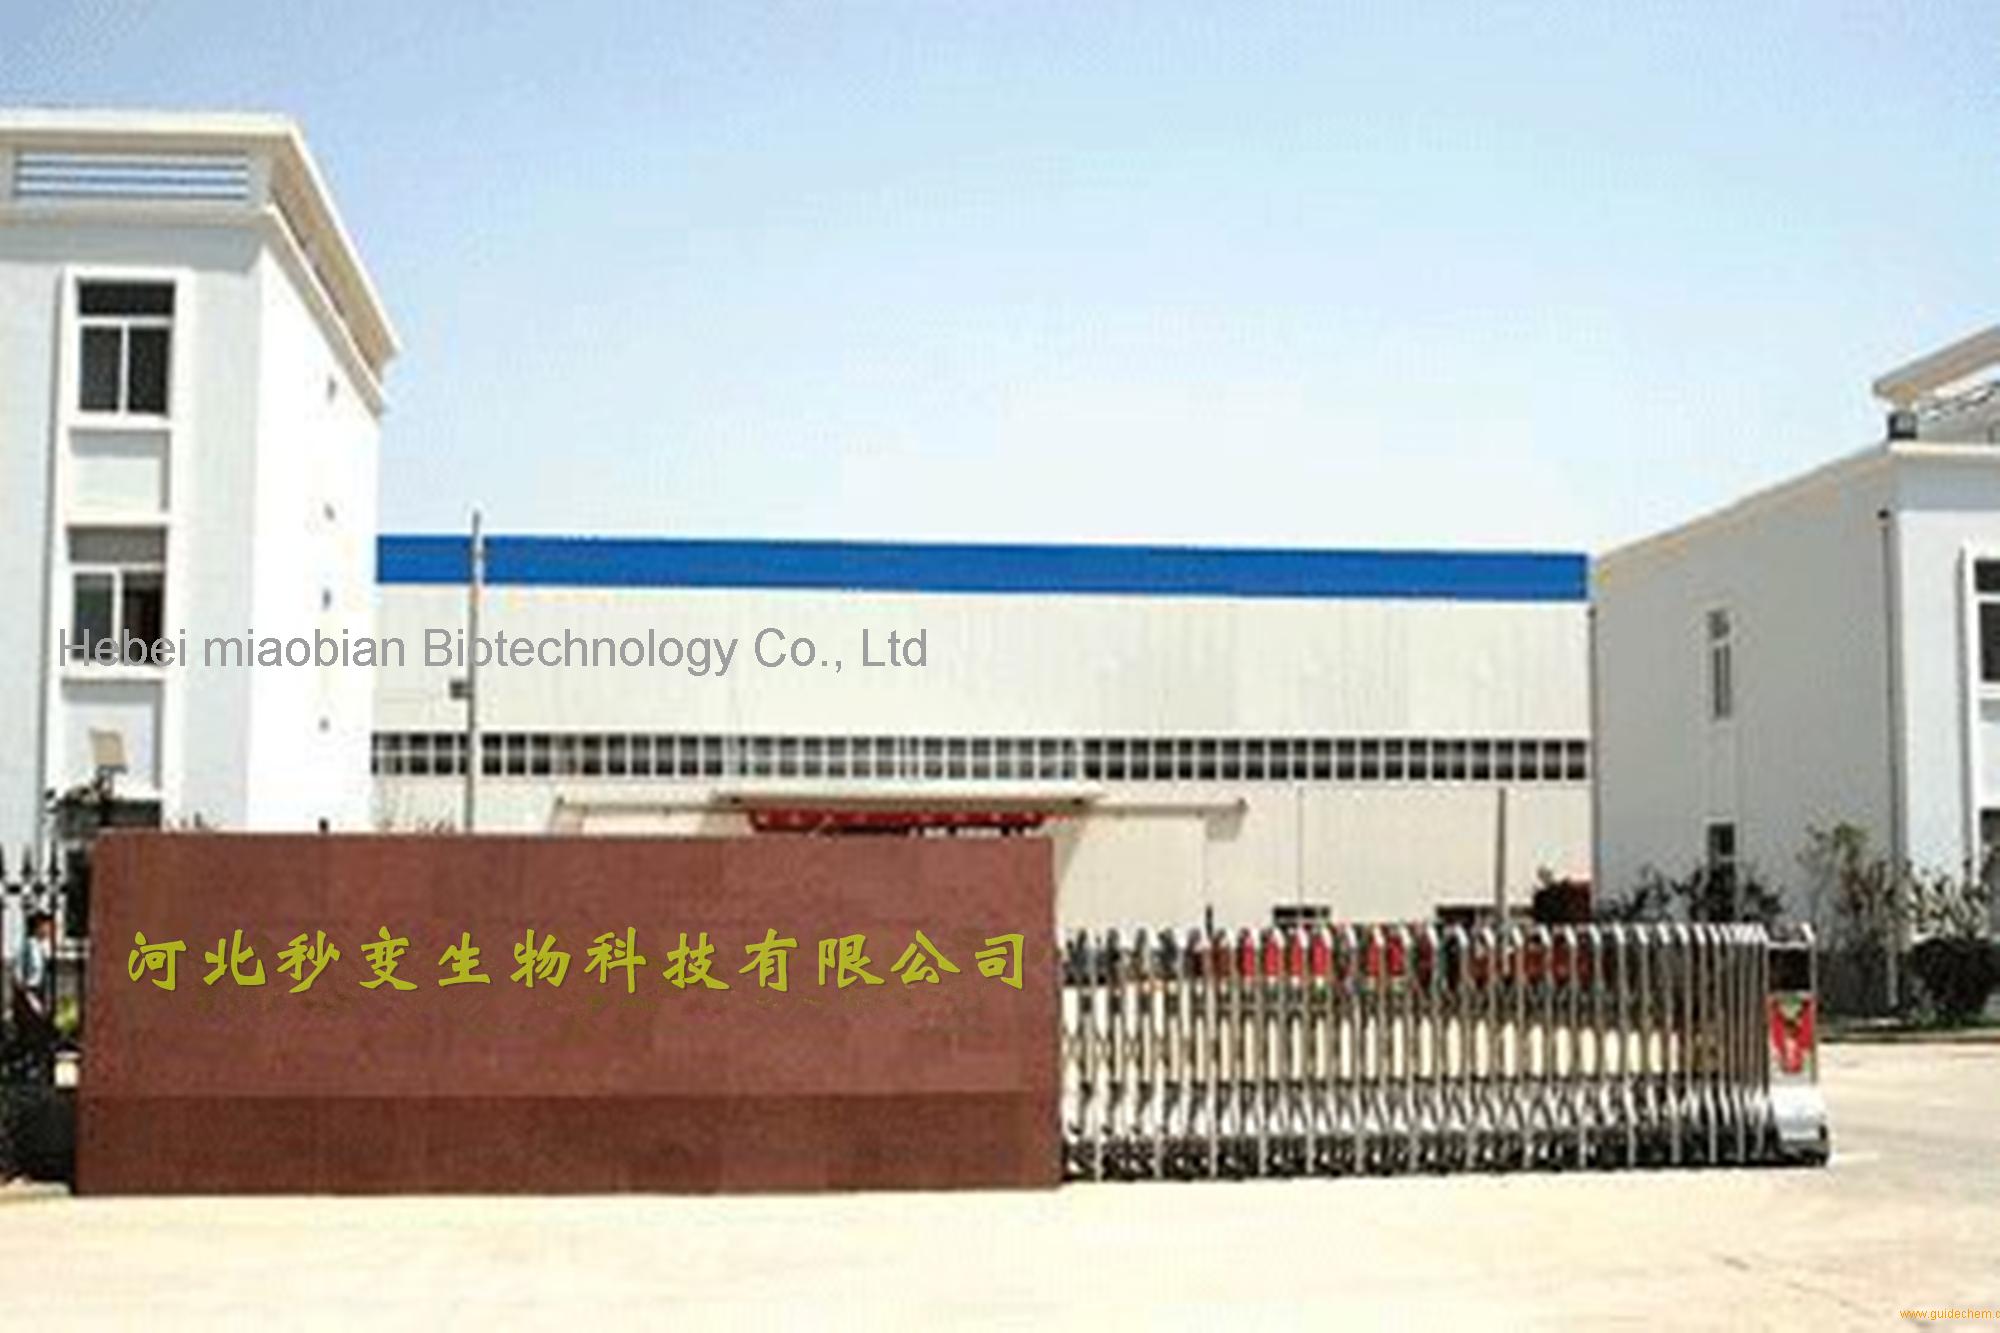 Hebei miaobian Biotechnology Co., Ltd